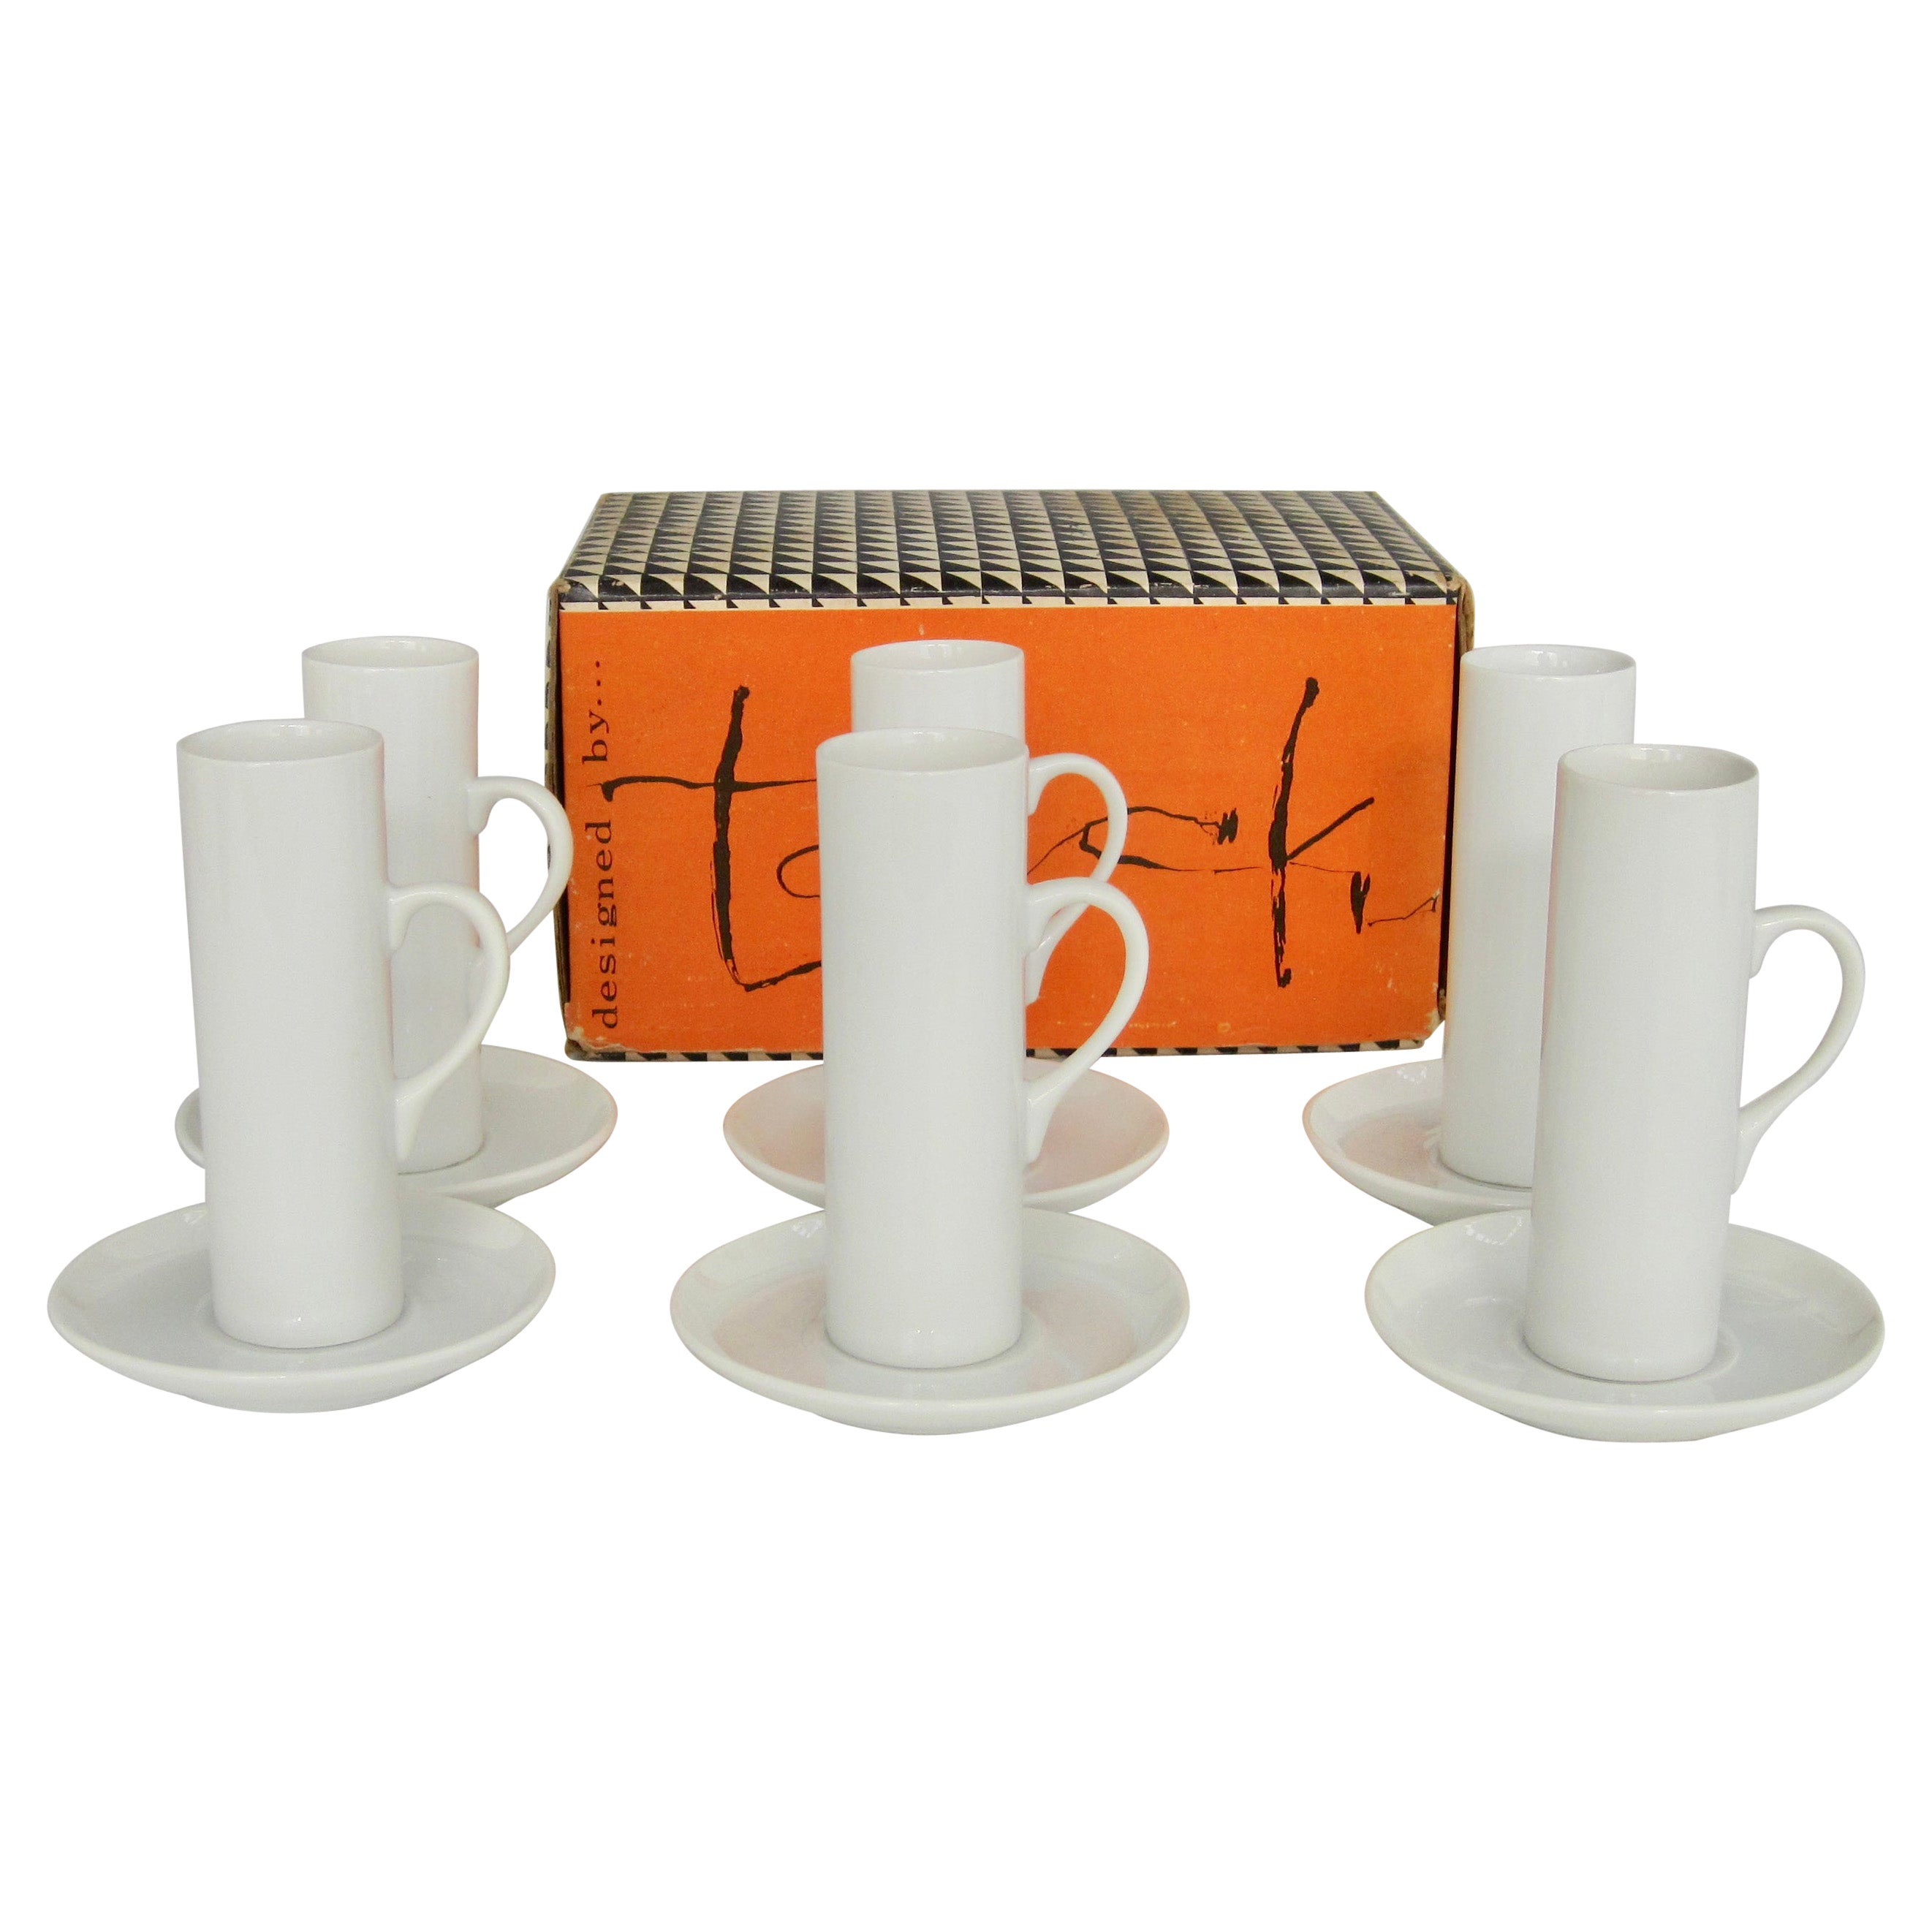 Lagardo Tackett Schmid White Porcelain Demitasse Cup & Saucer Set, 12 Pieces For Sale